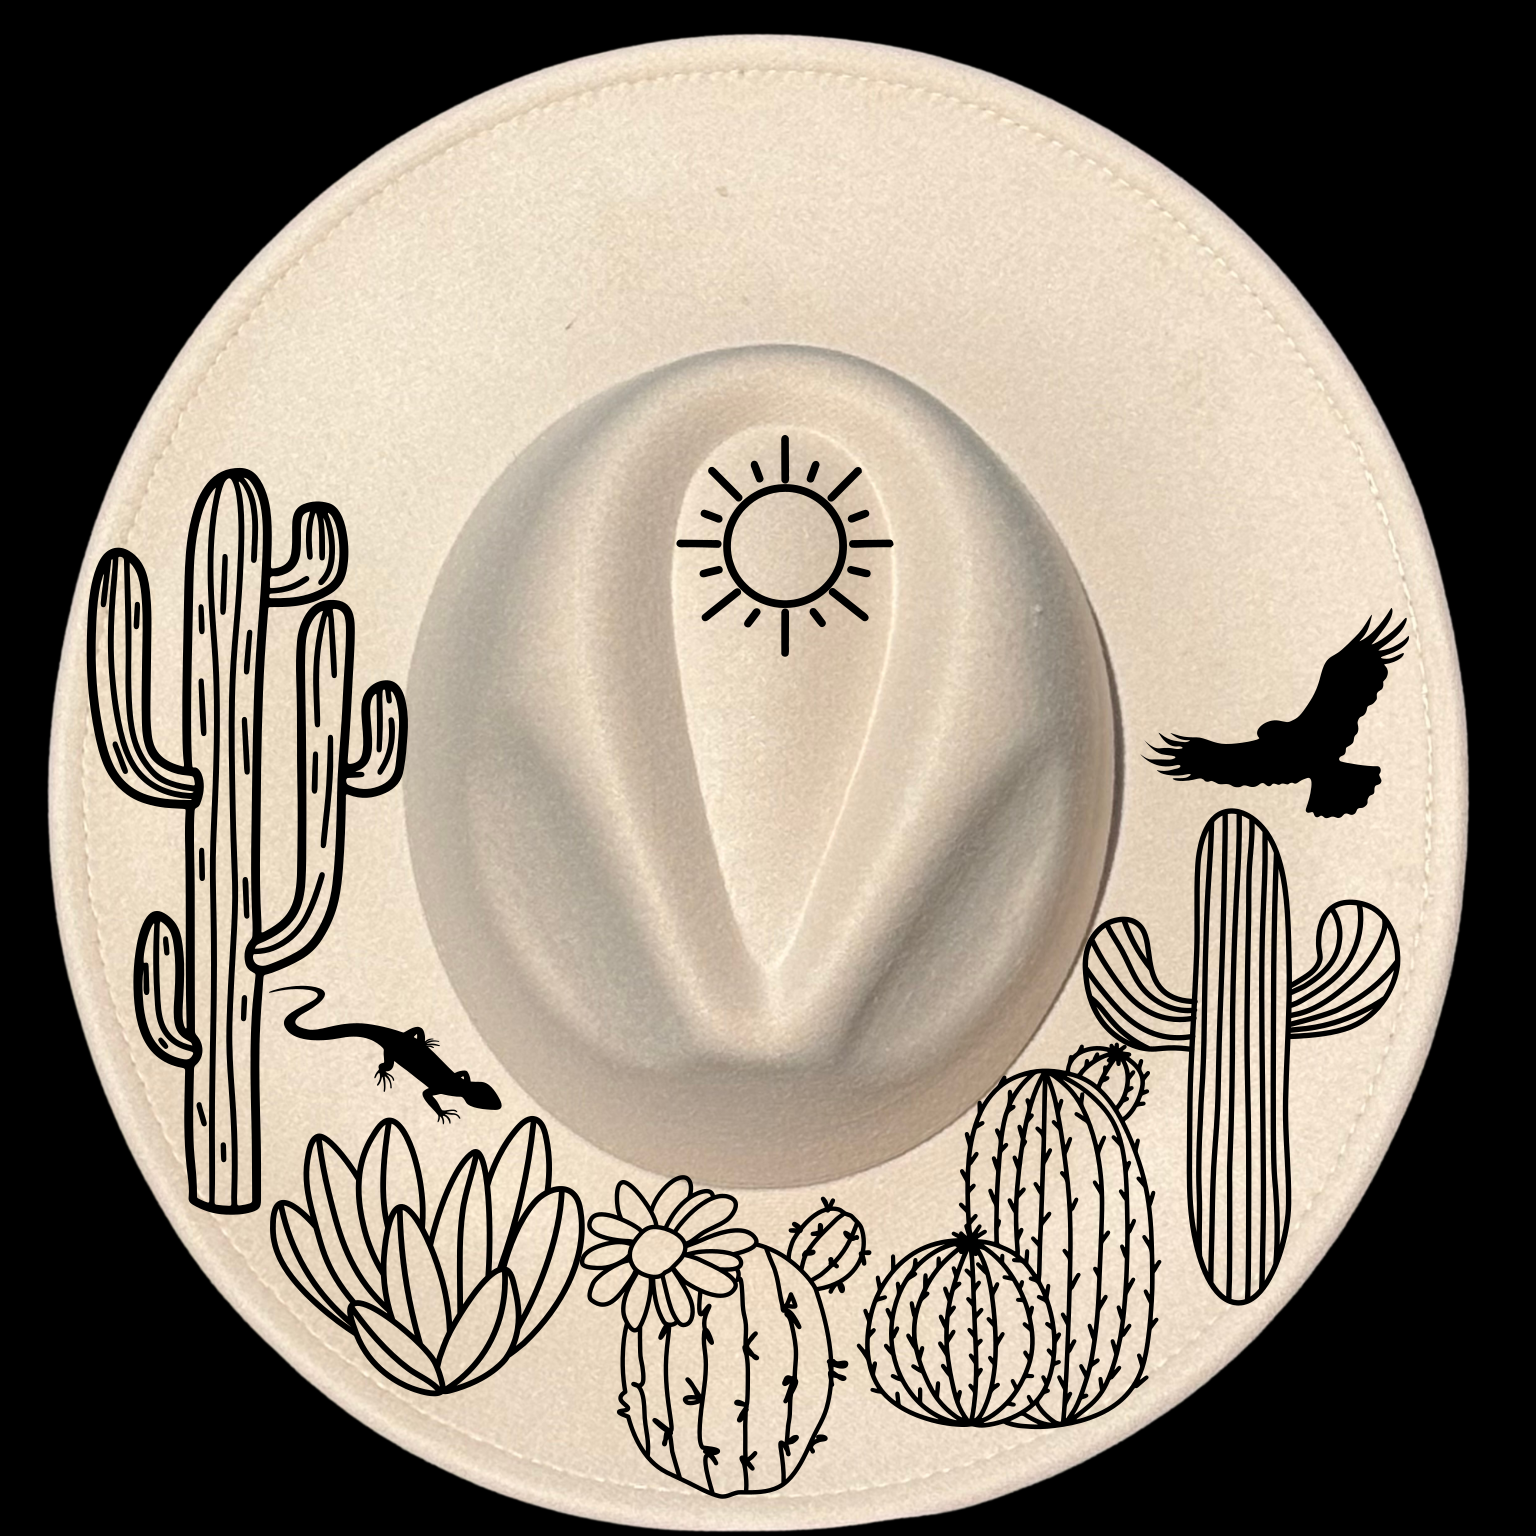 Desert Cactus design on a wide brim hat